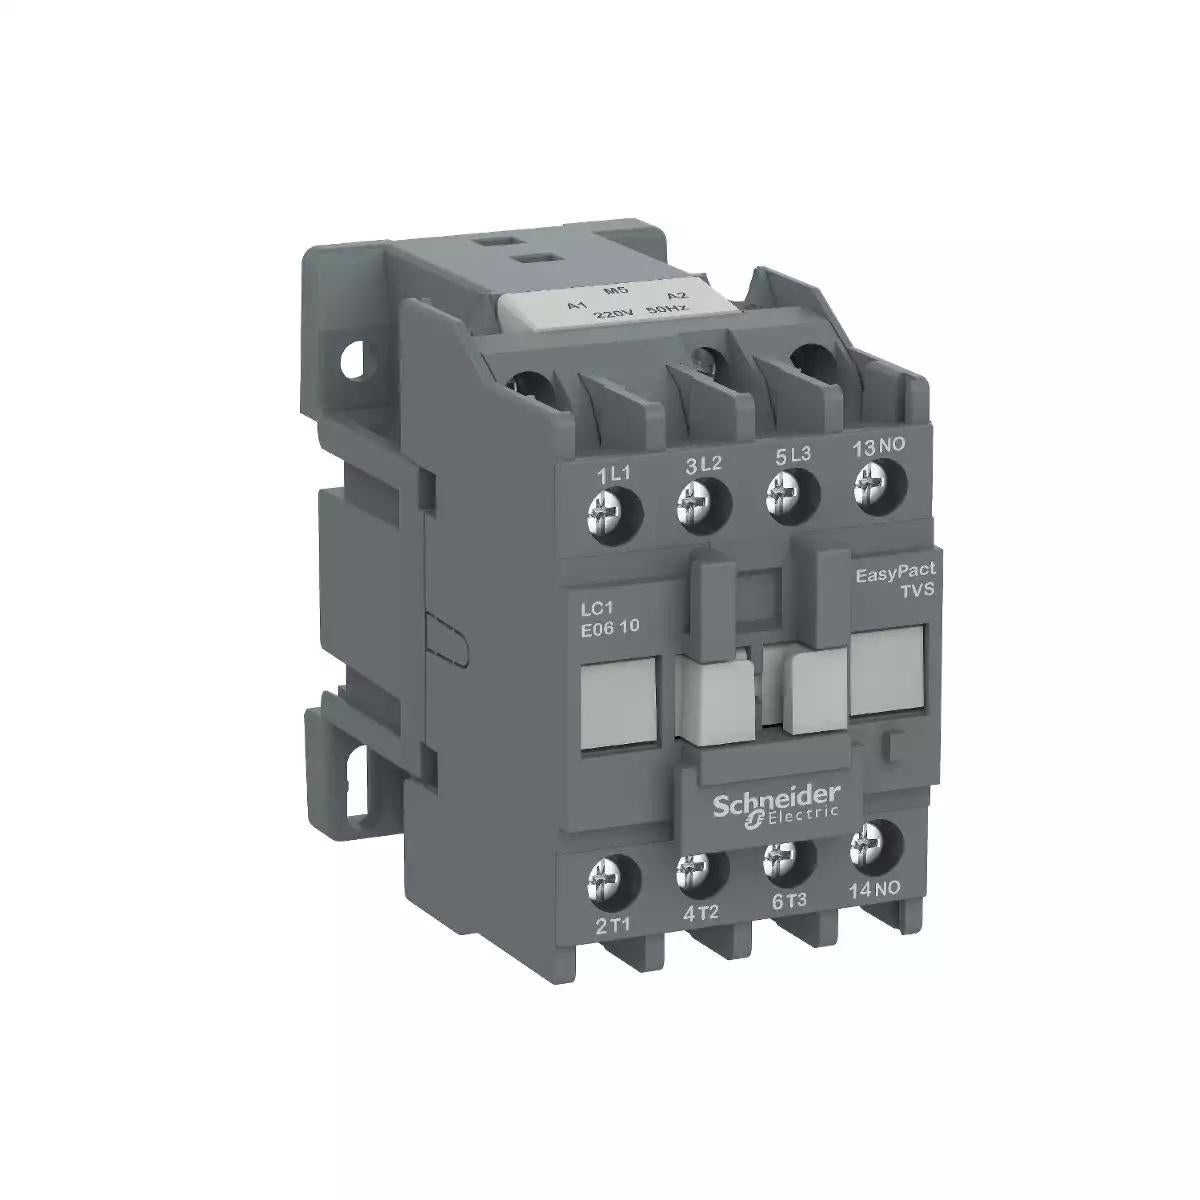 Contactor,EasyPact TVS,3P(3NO),AC-3,<=440V,18A,220V AC coil,50/60Hz,1NO auxiliary contact